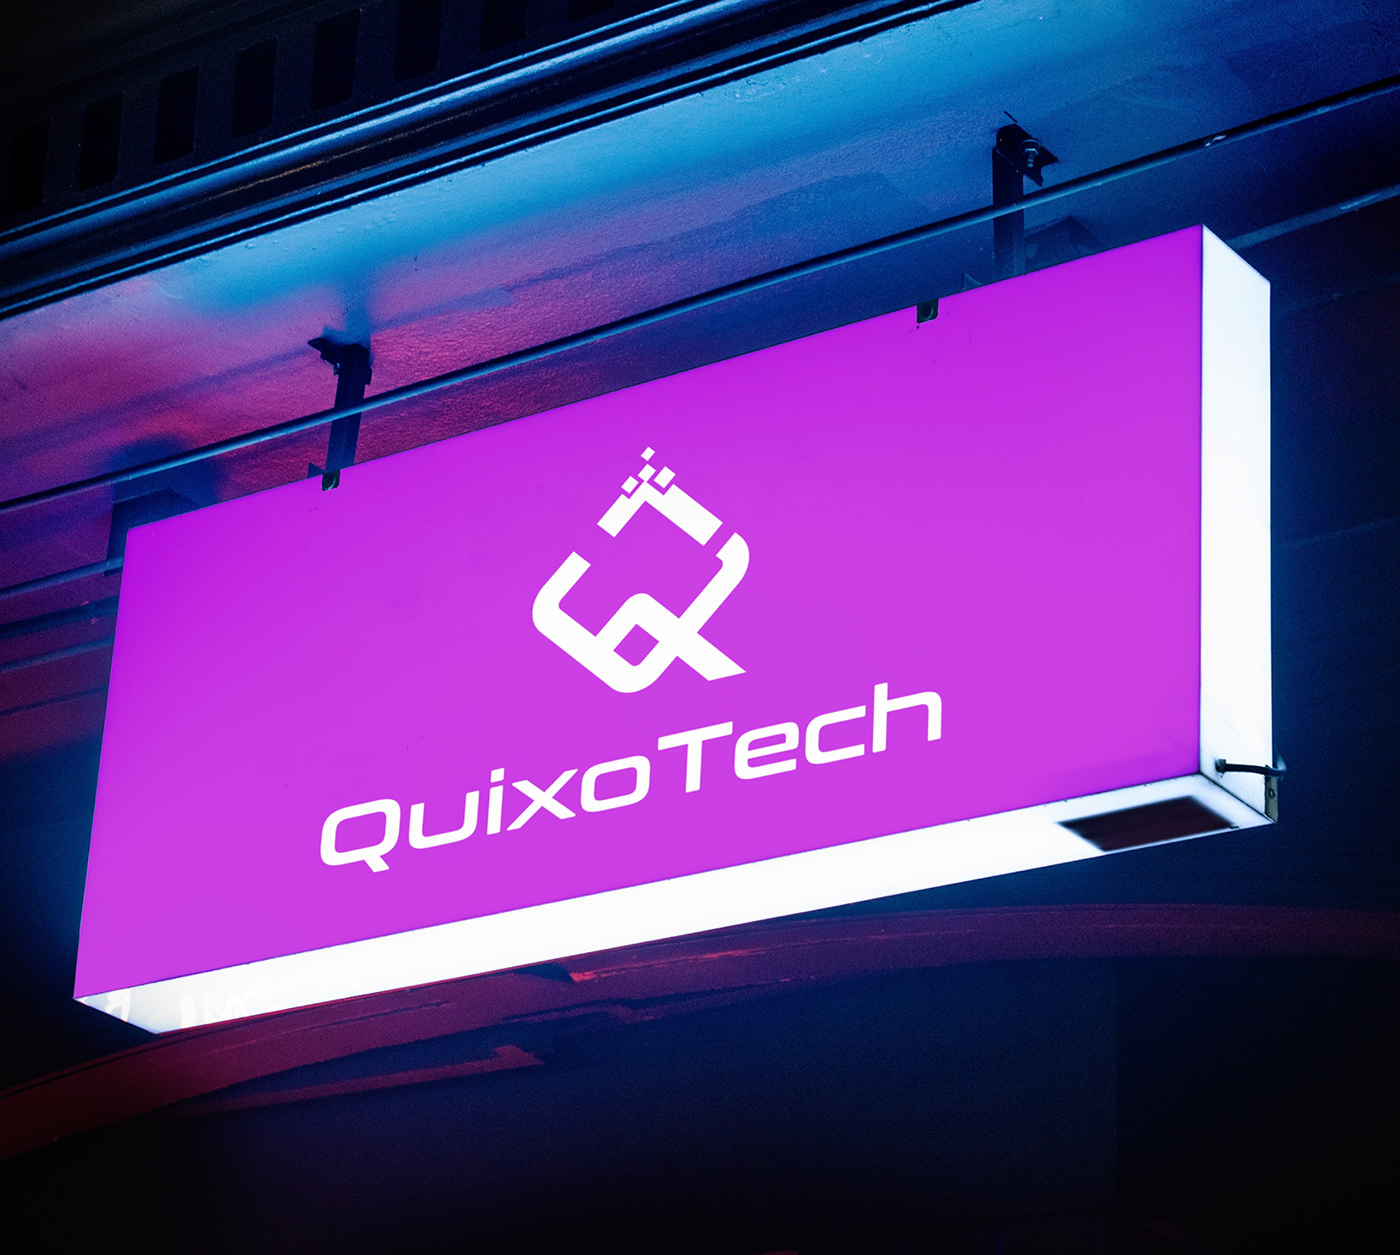 q logo T logo tech Technology technical company logo minimalist modern Logotype Branding Identity